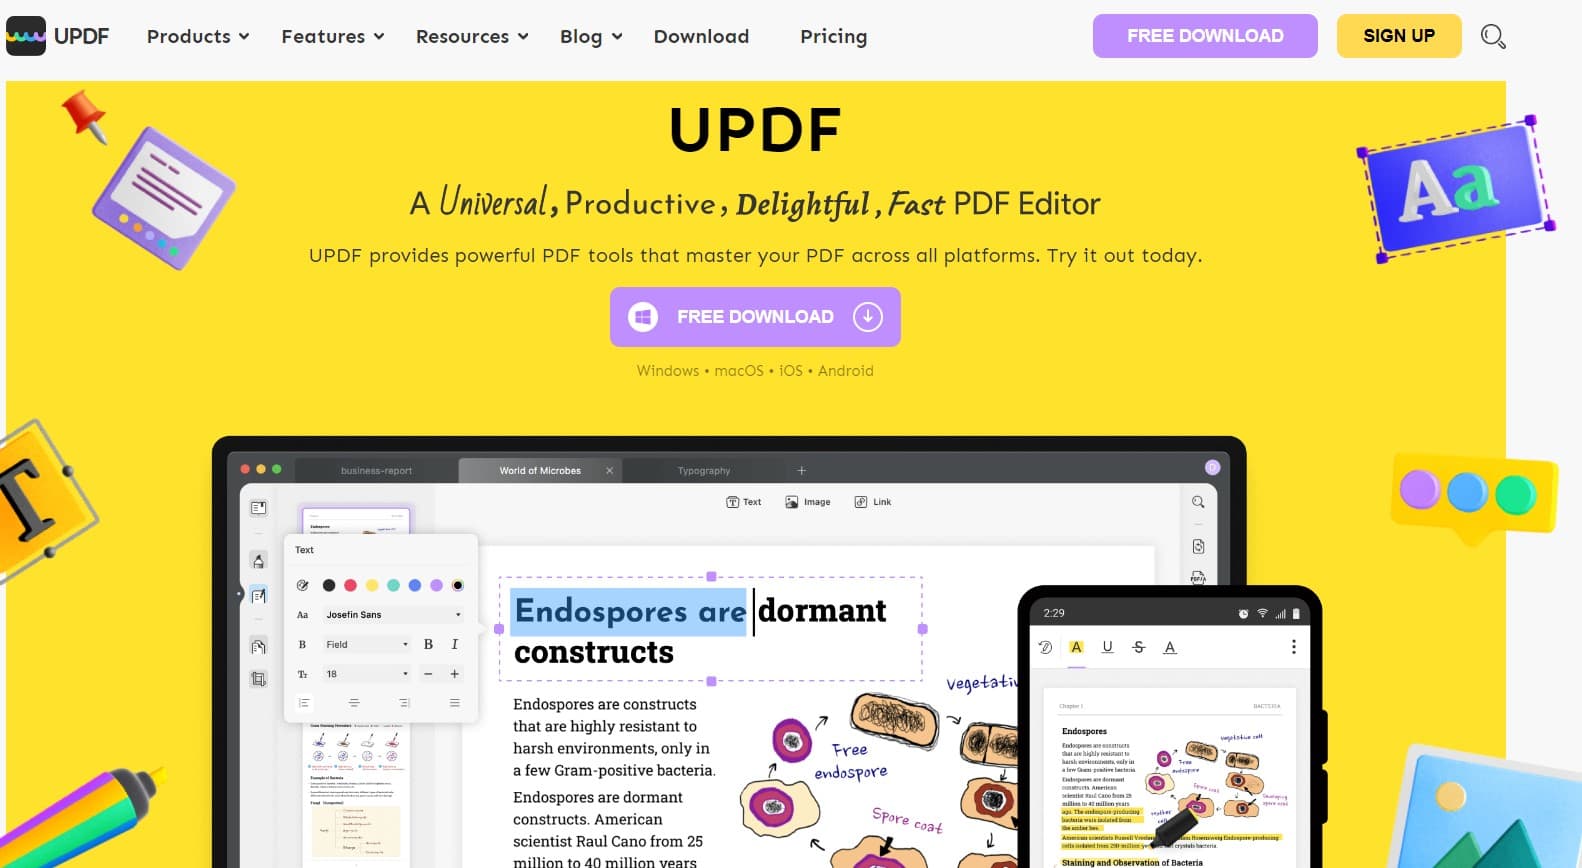 UPDF Review